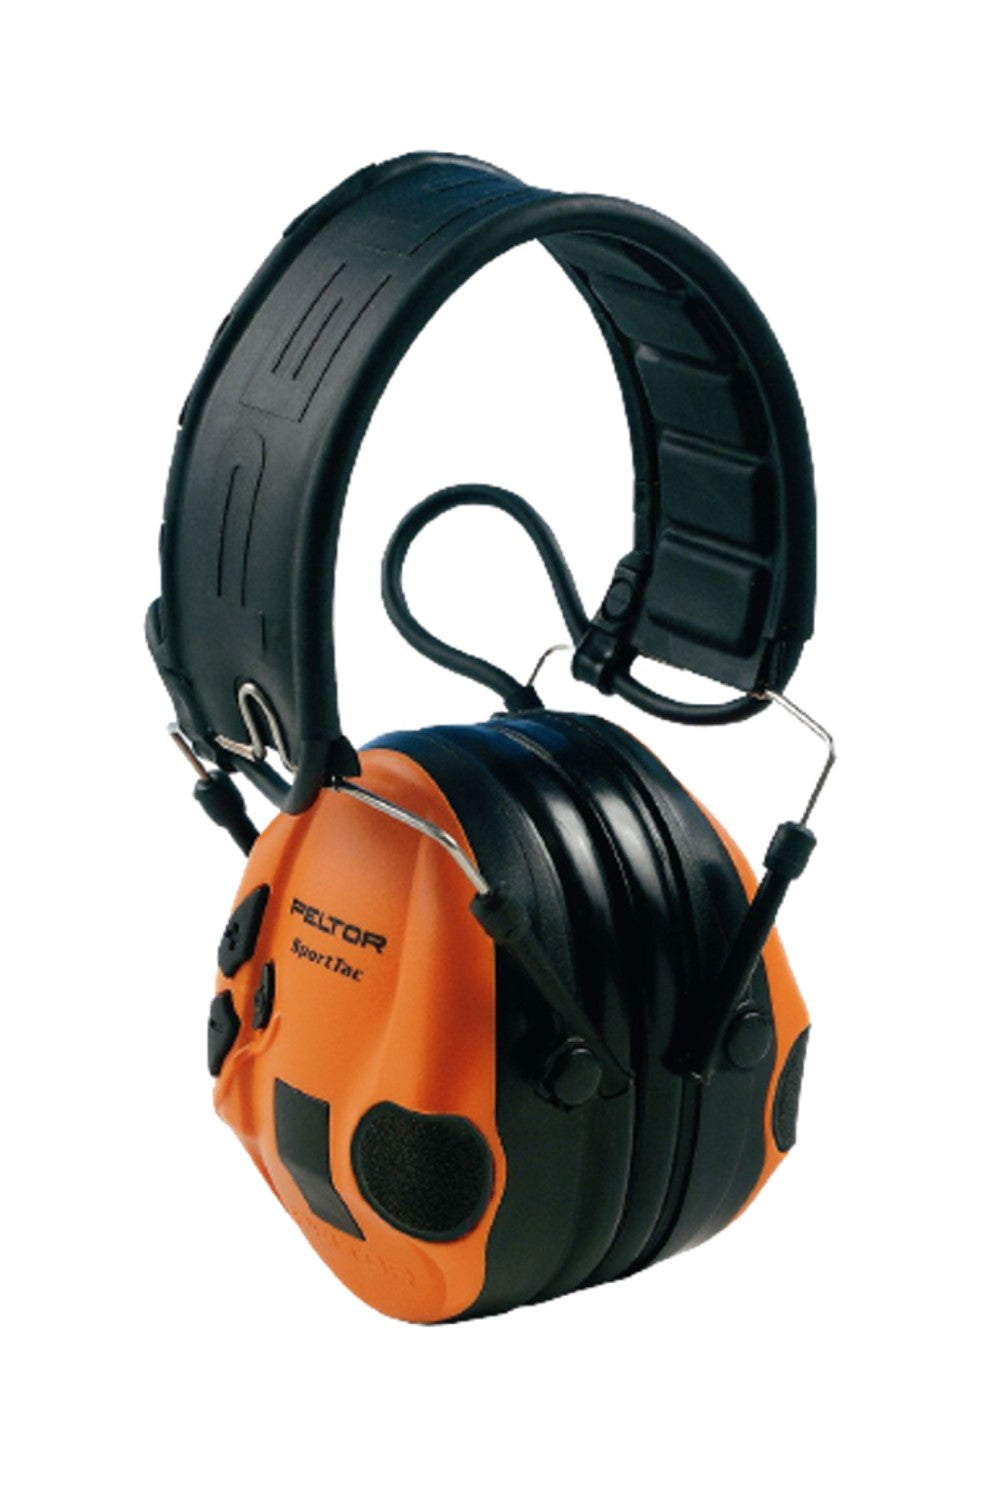 Peltor 3M SportTac Electronic Hearing Protection in Orange 